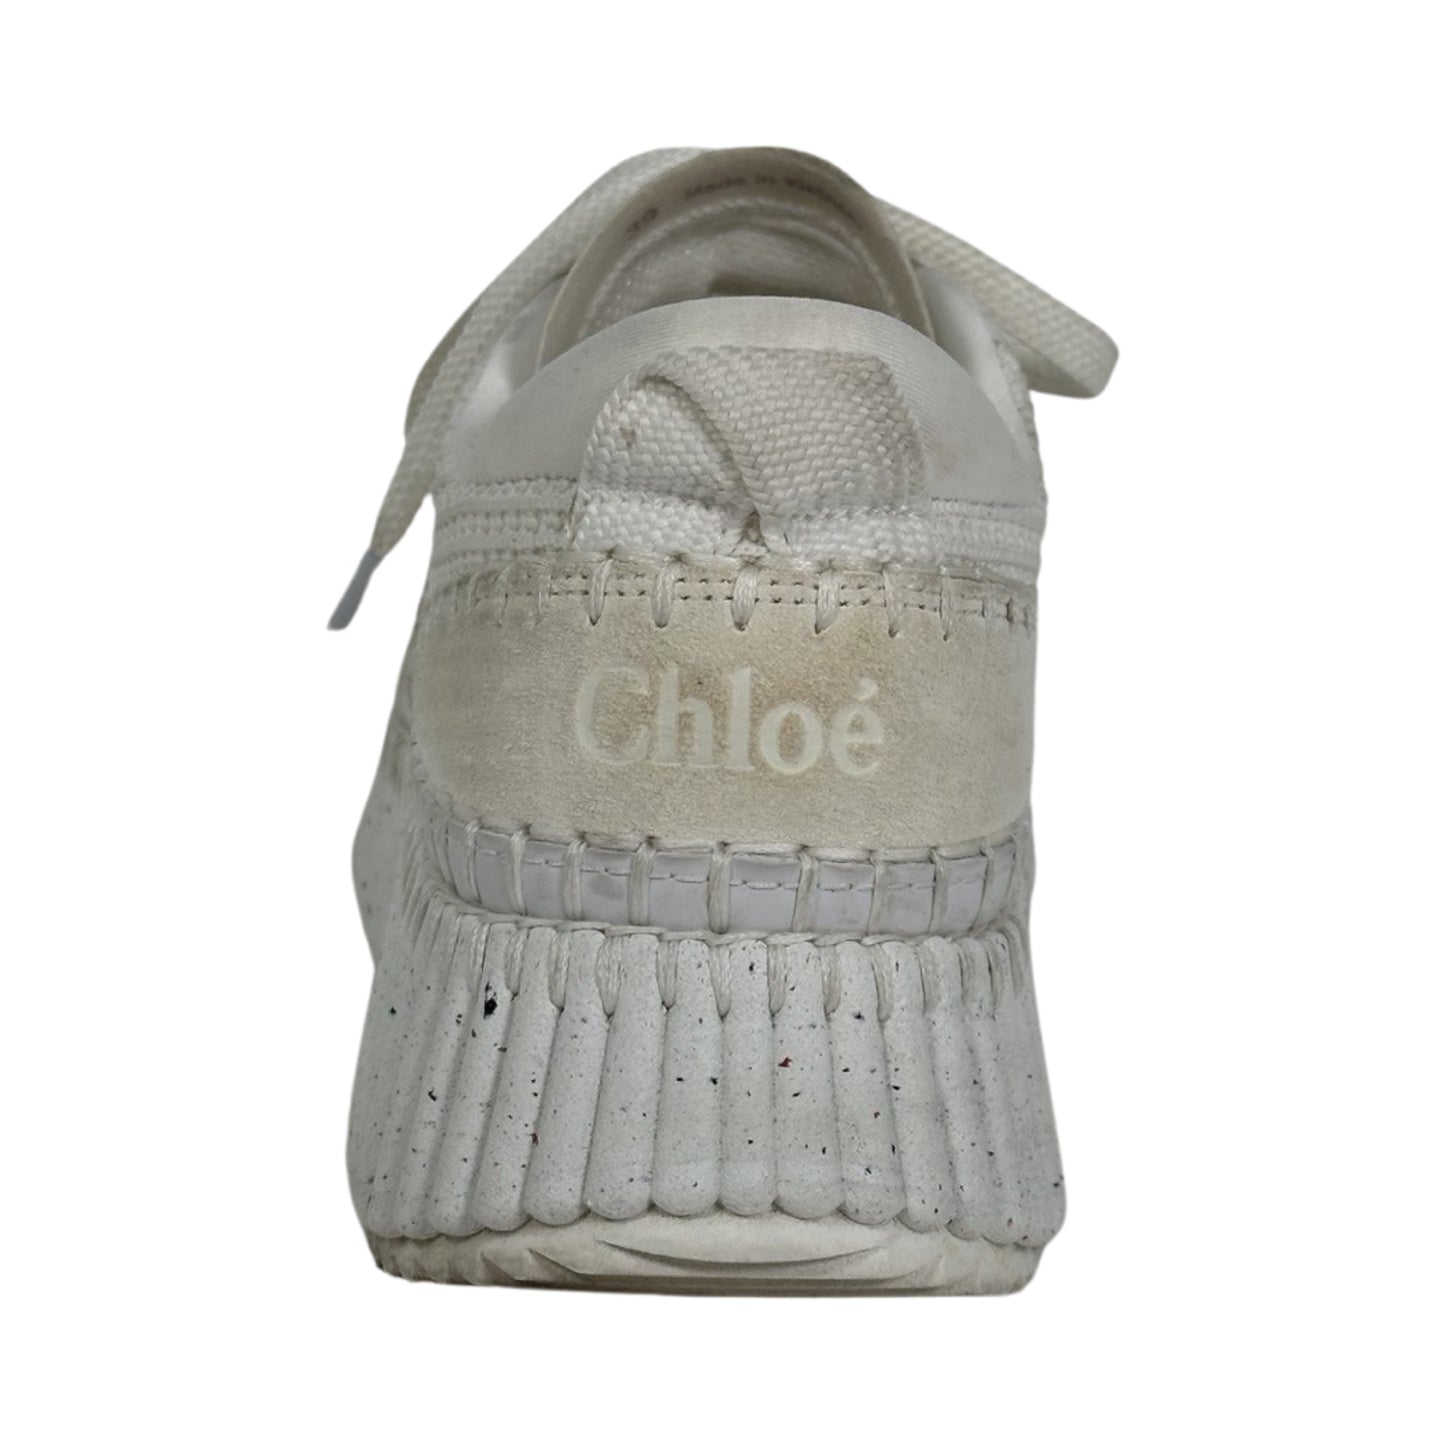 Chloé Nama Sneakers - Size 9